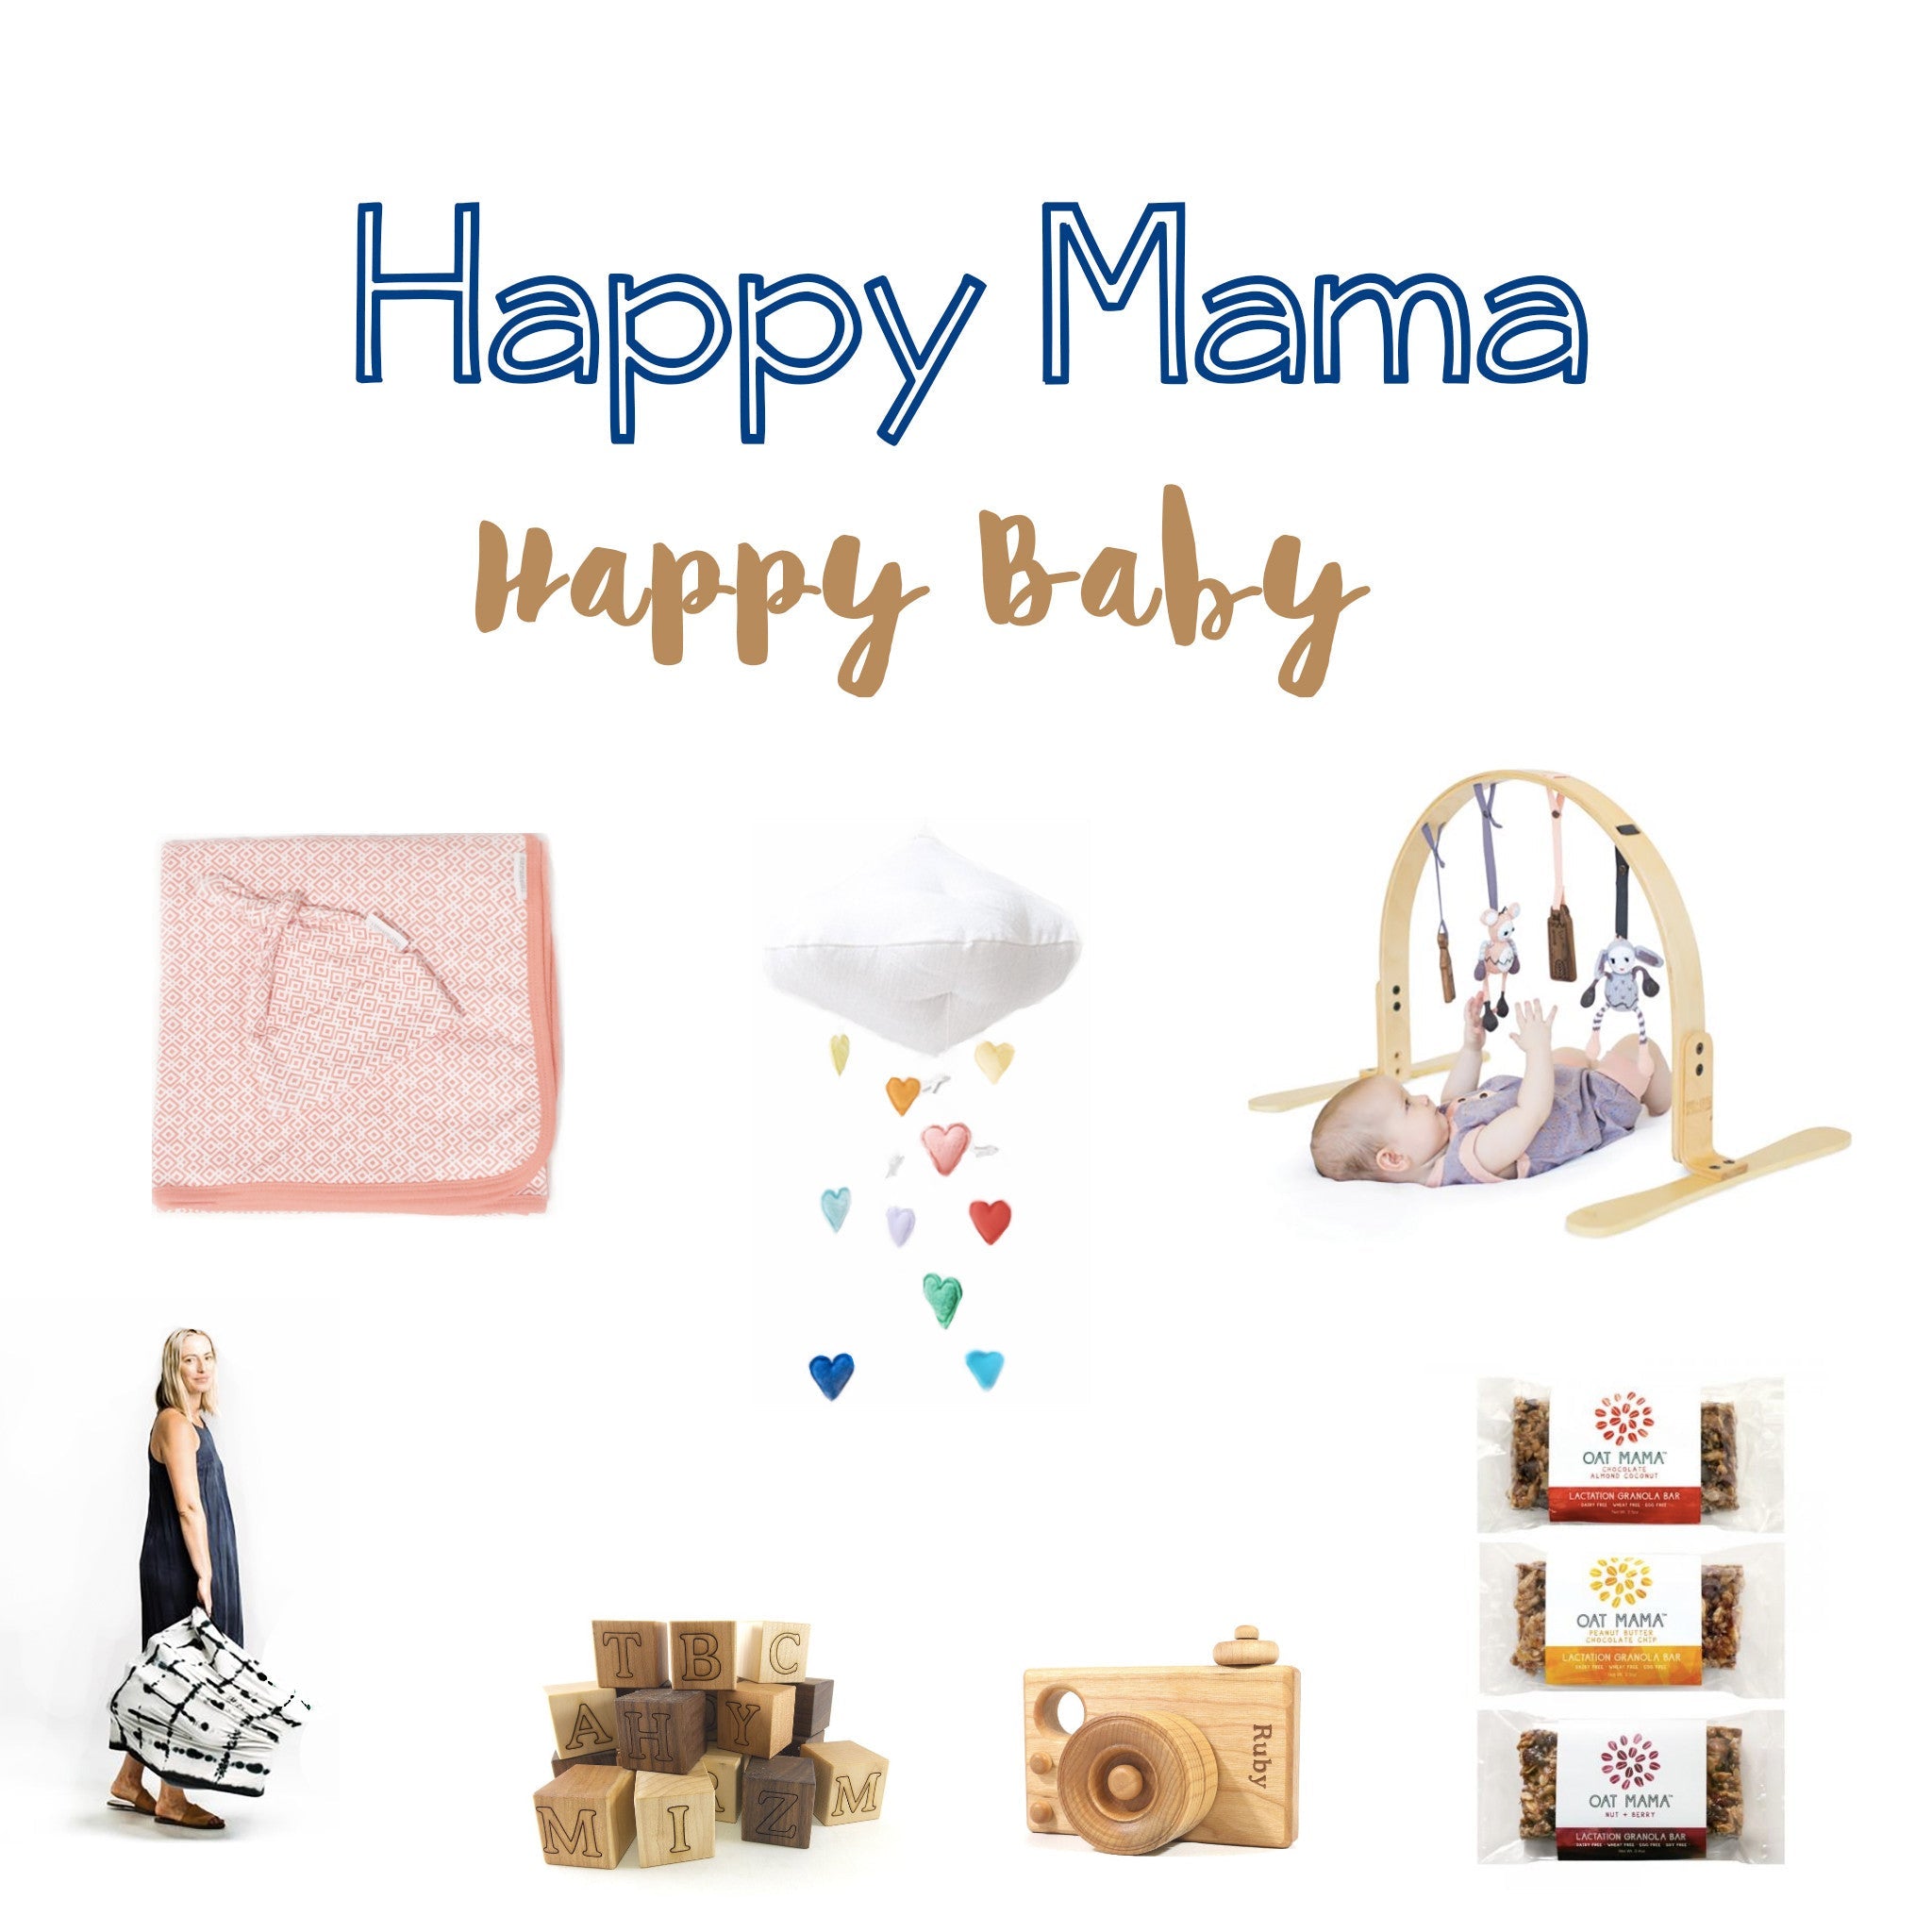 Happy Mama Happy Baby GIVEAWAY 